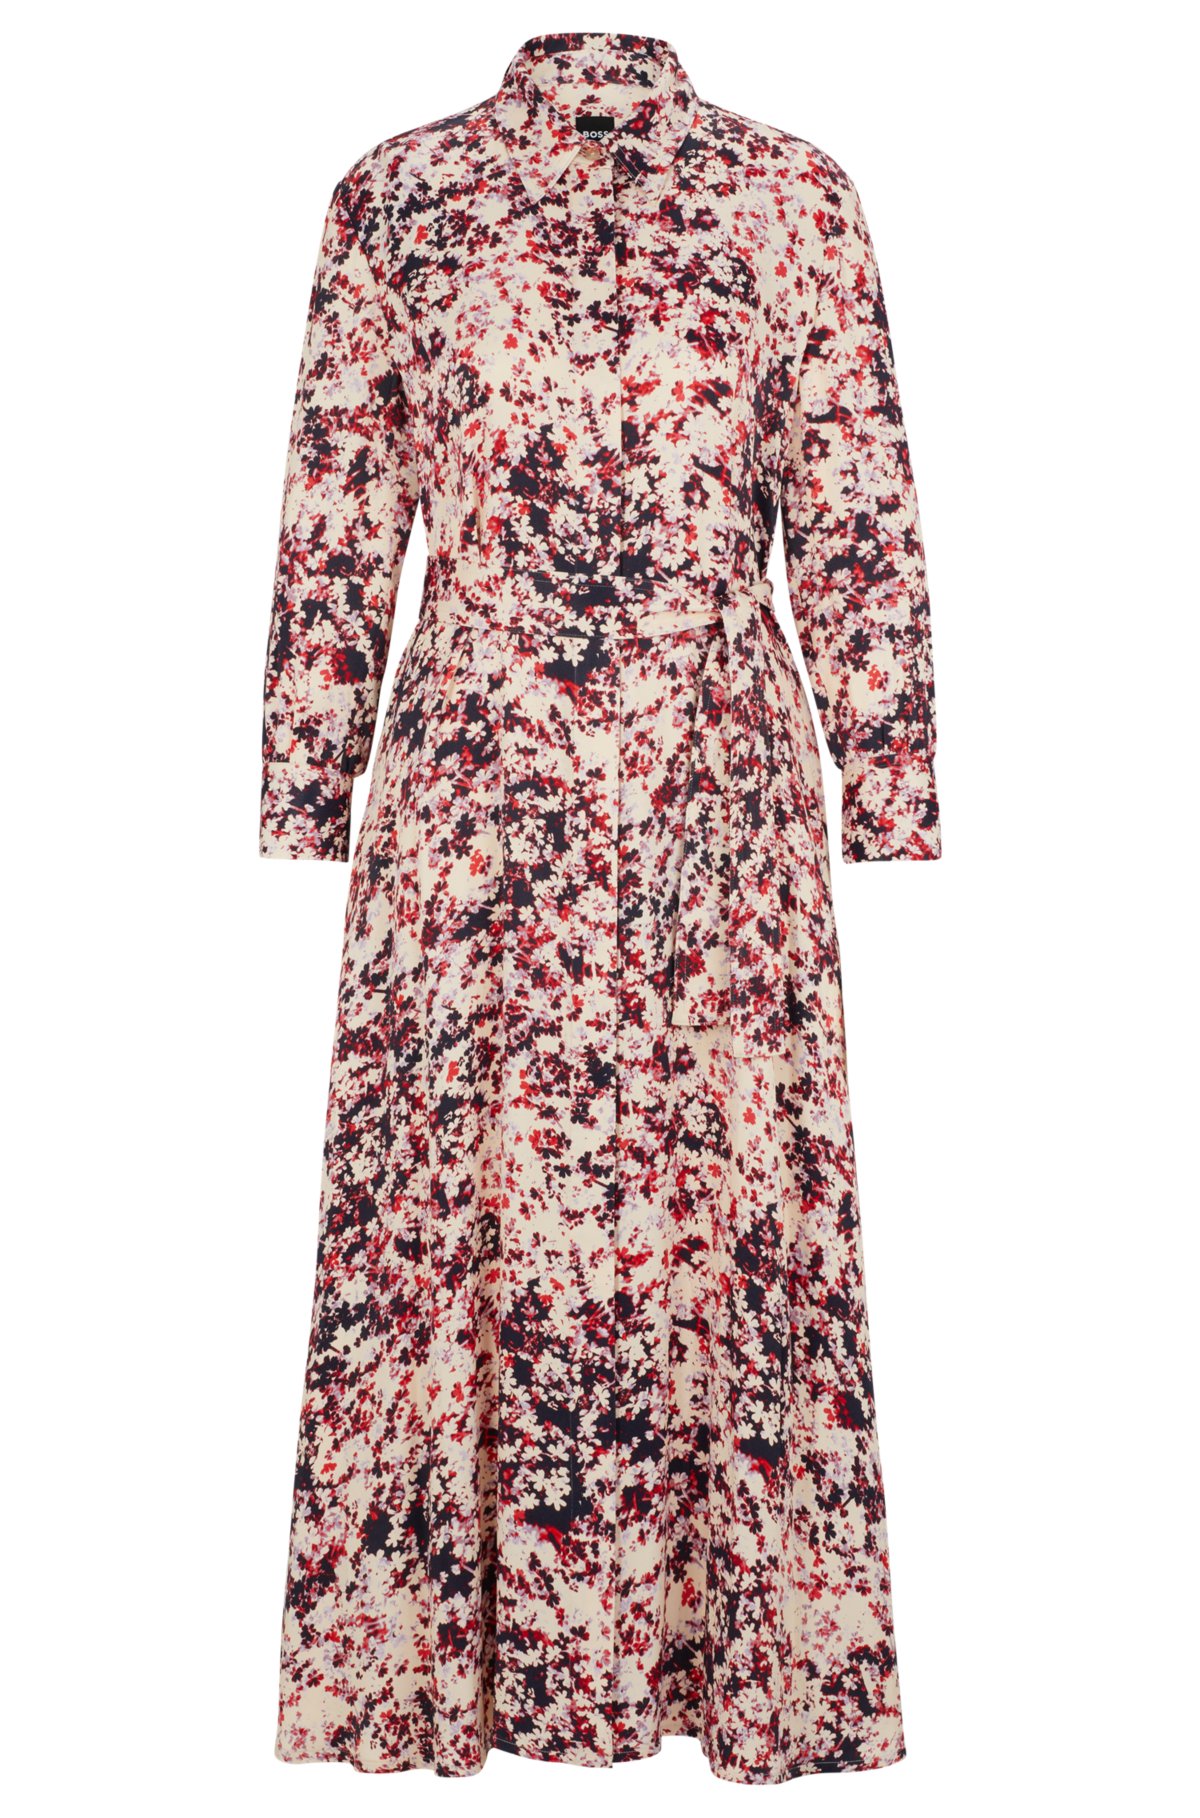 Long-sleeved shirt dress in floral-print satin, Patterned